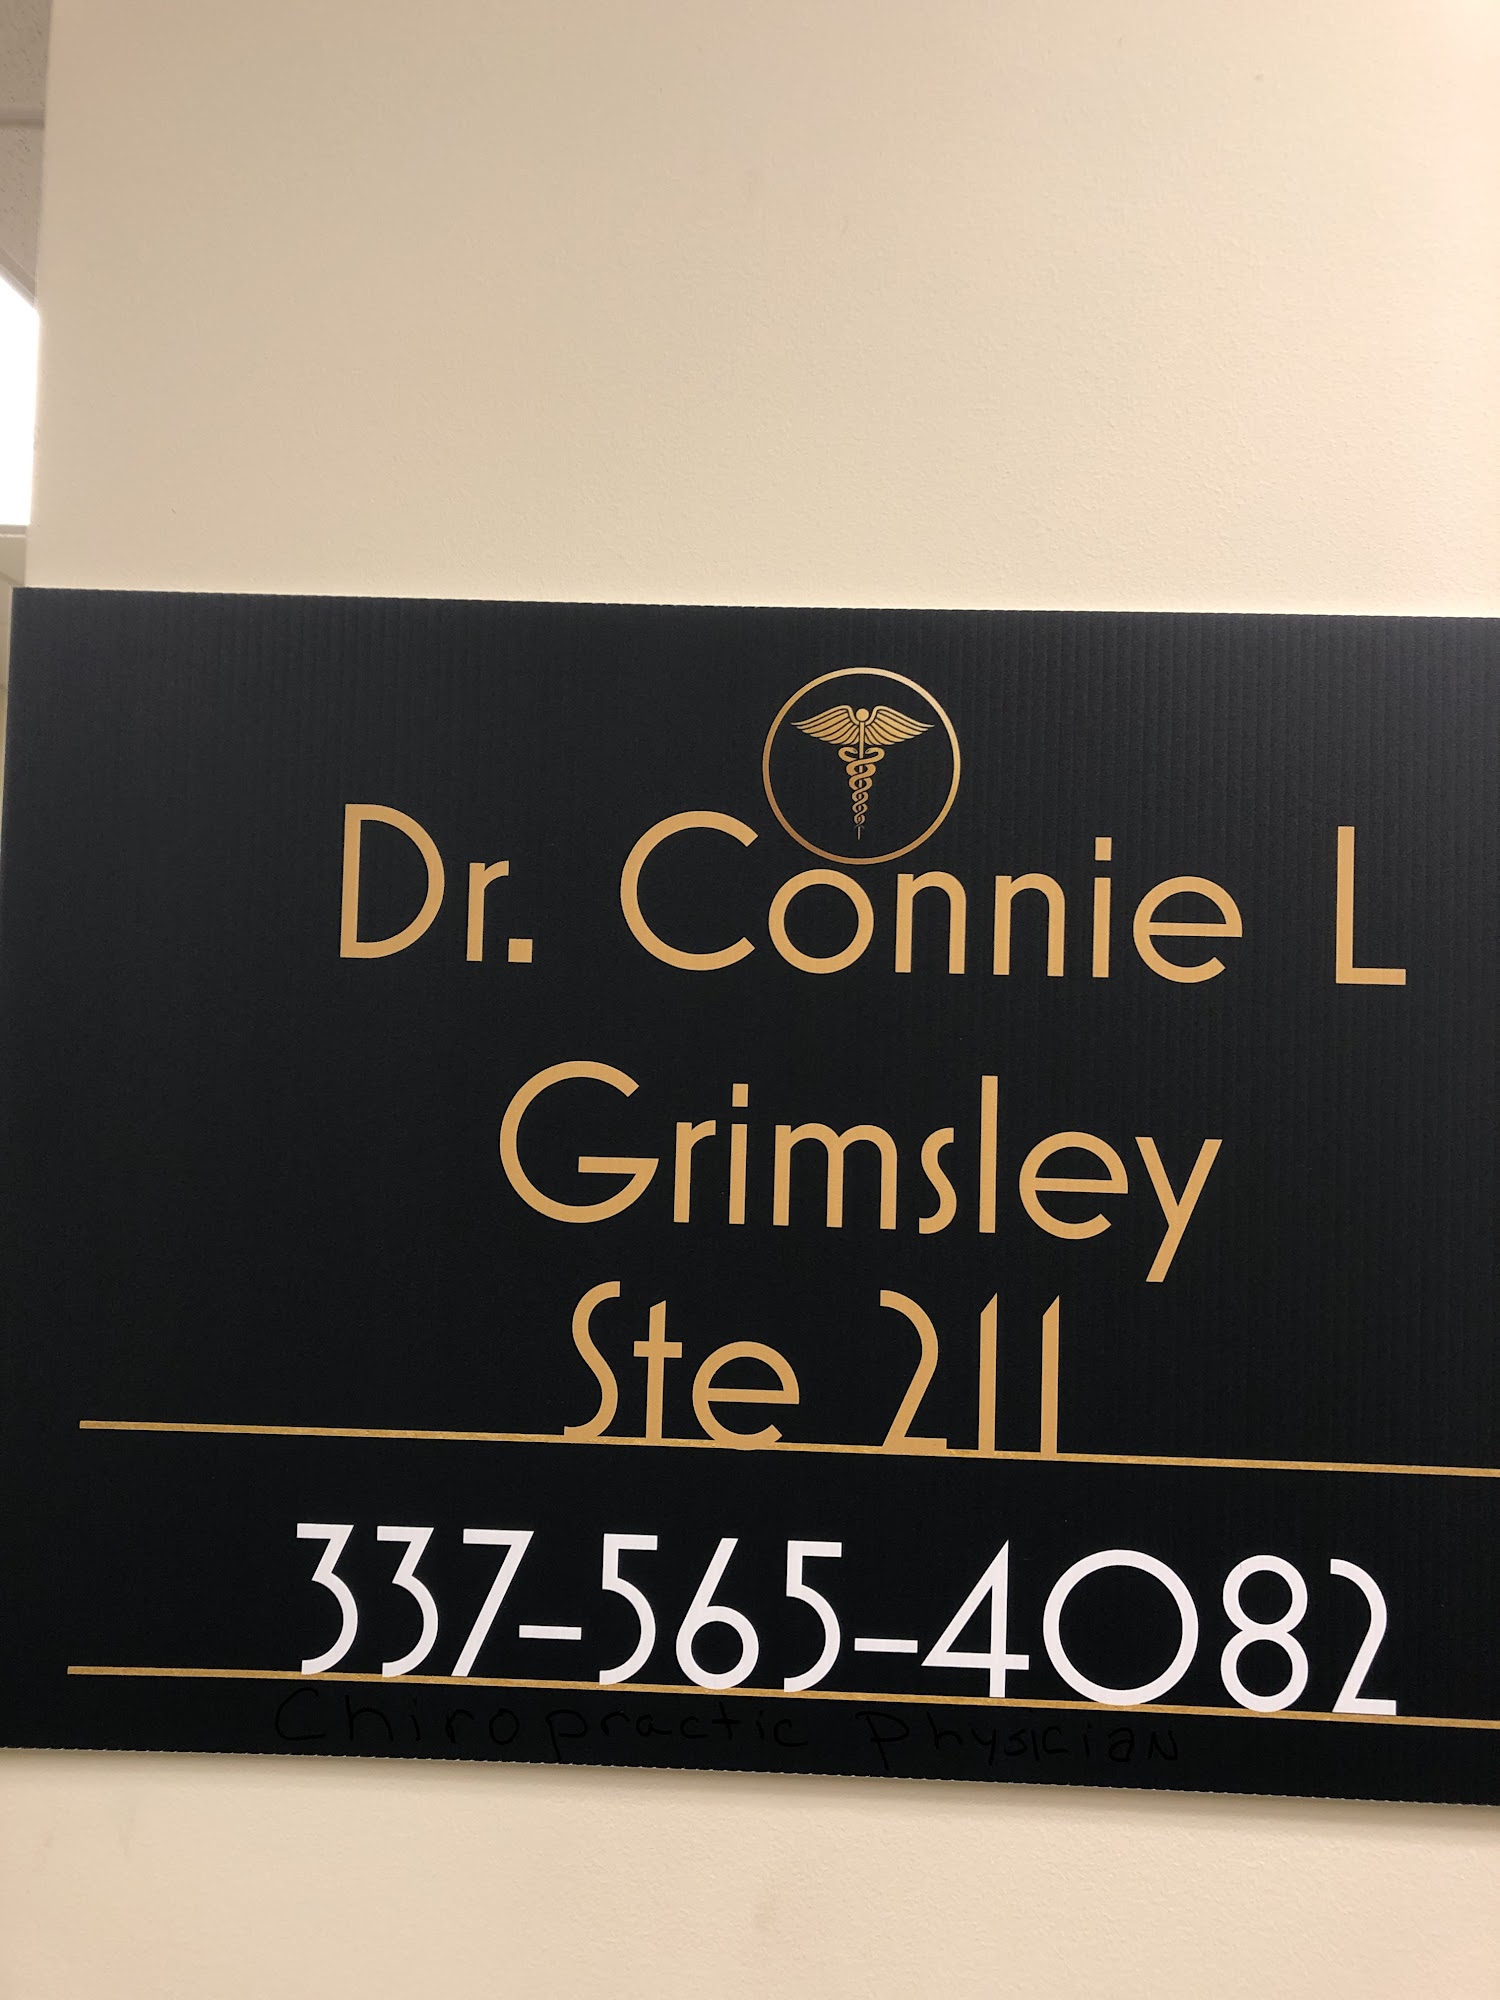 Connie L Grimsley, D.C.